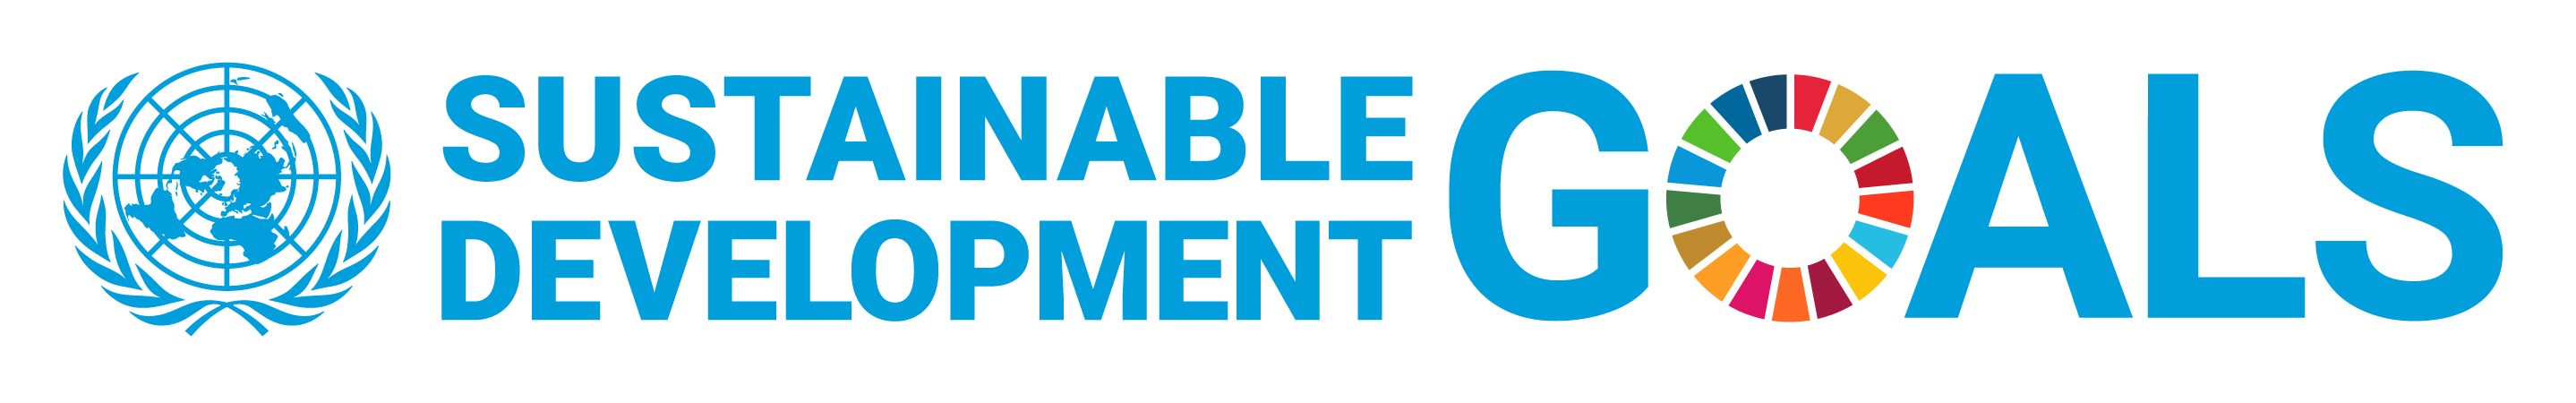 Logo: Sustainable development goals